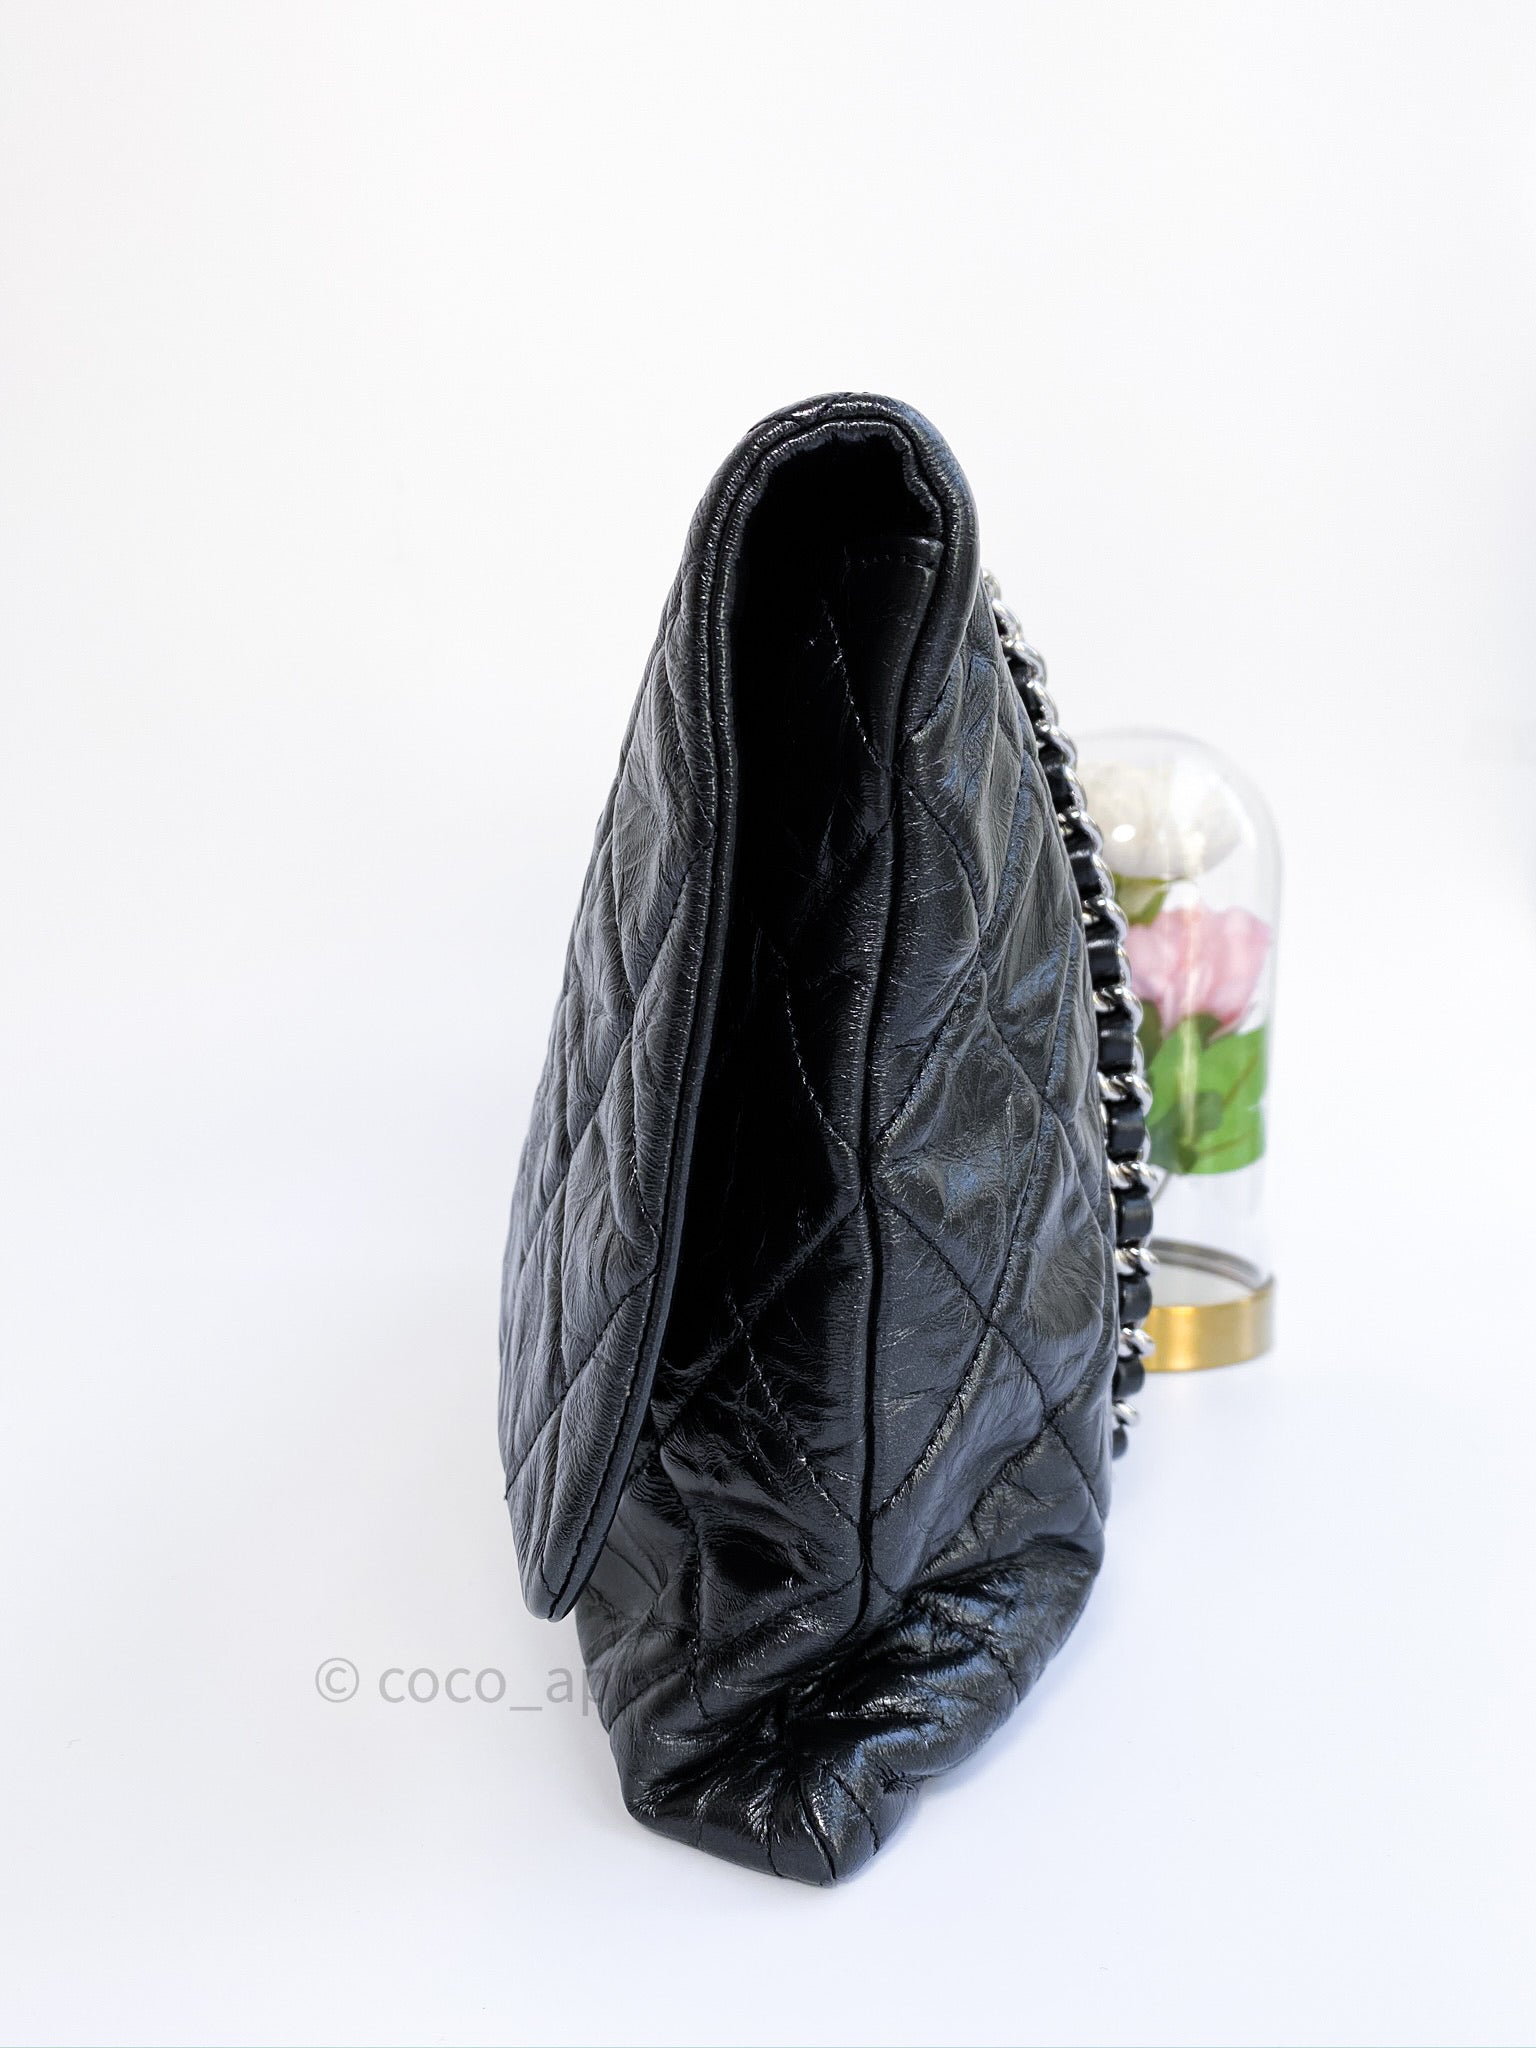 Chanel Metallic Crumpled Calfskin Big Bang Large Flap Bag Black – Coco  Approved Studio